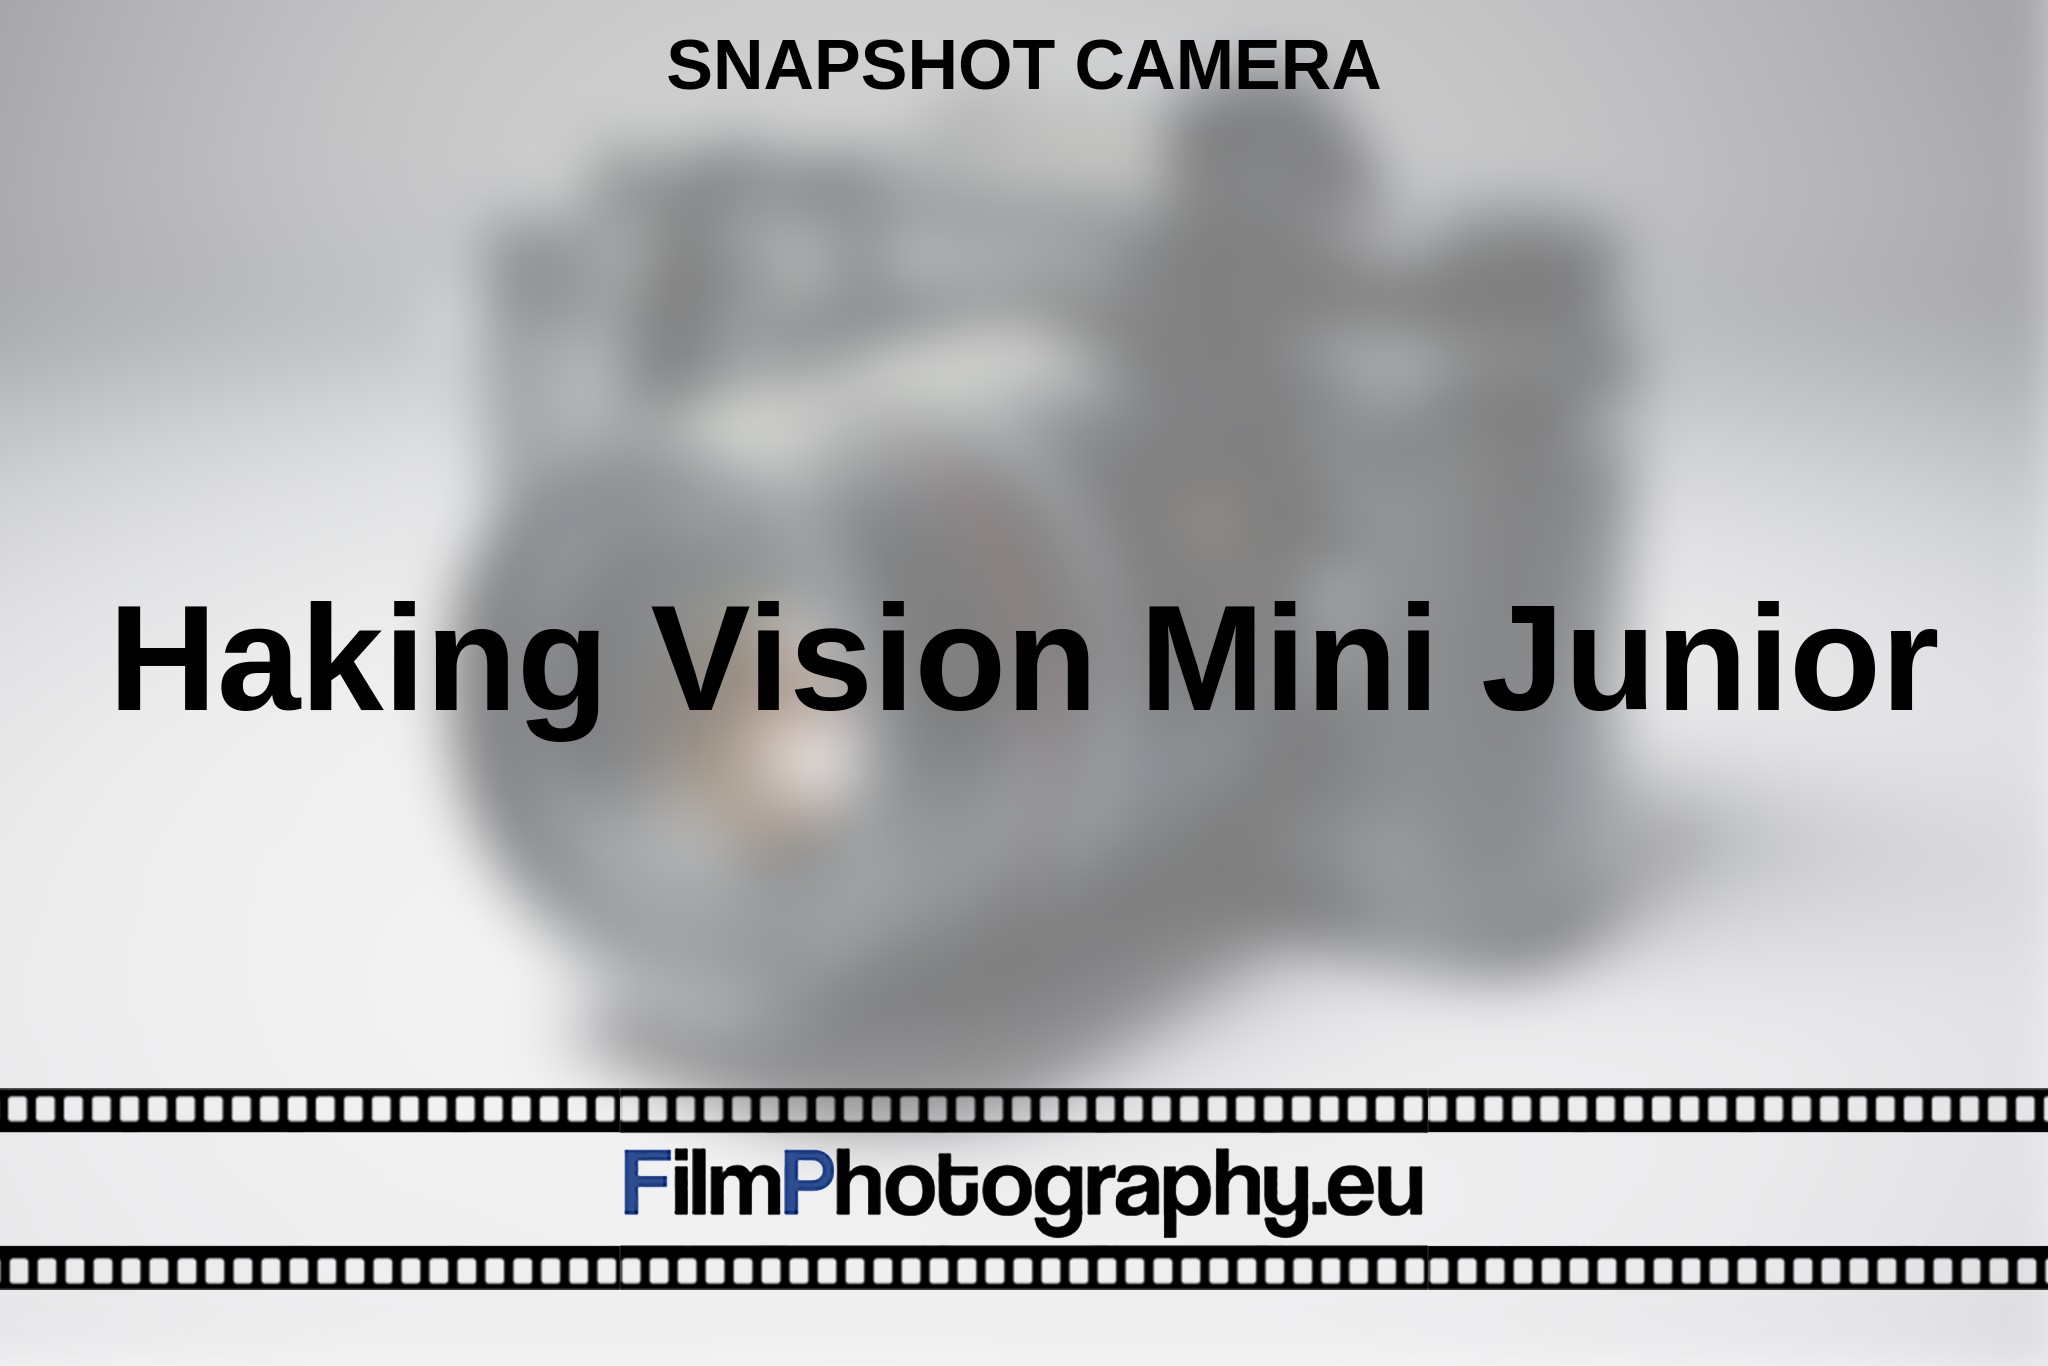 haking-vision-mini-junior-snapshot-camera-en-bnv.jpg